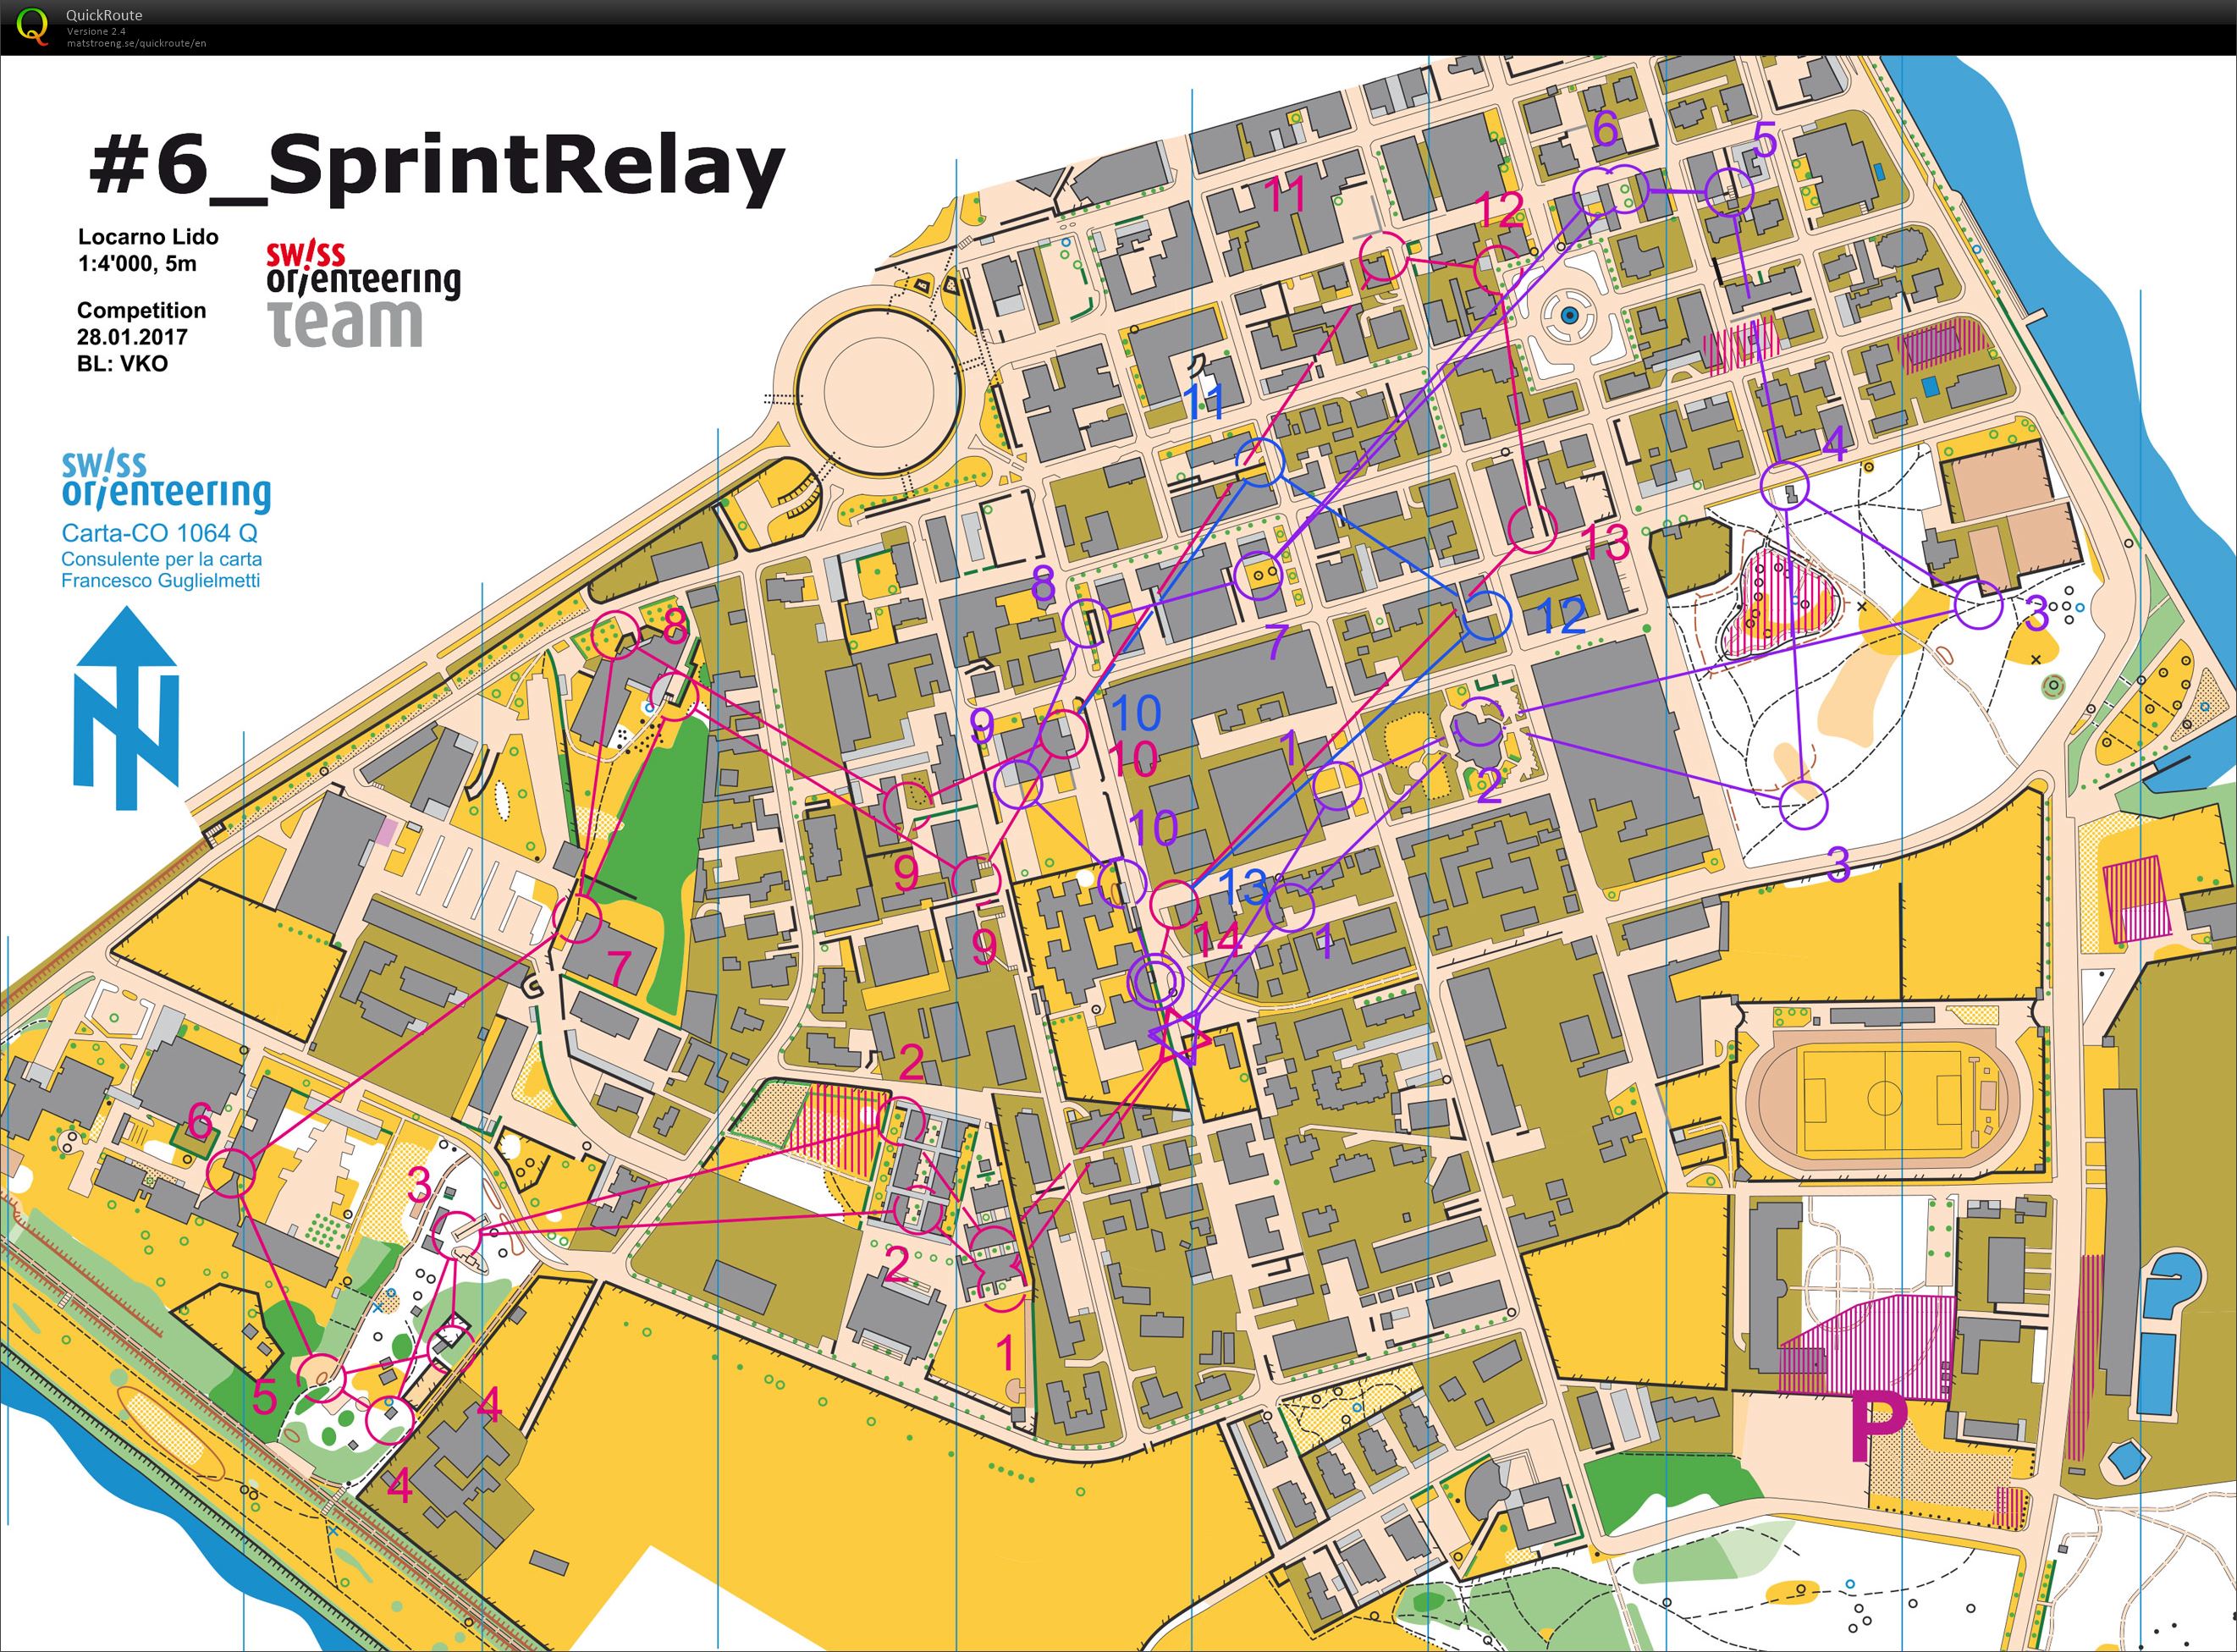 Sprint relay *chase start" (2017-01-28)